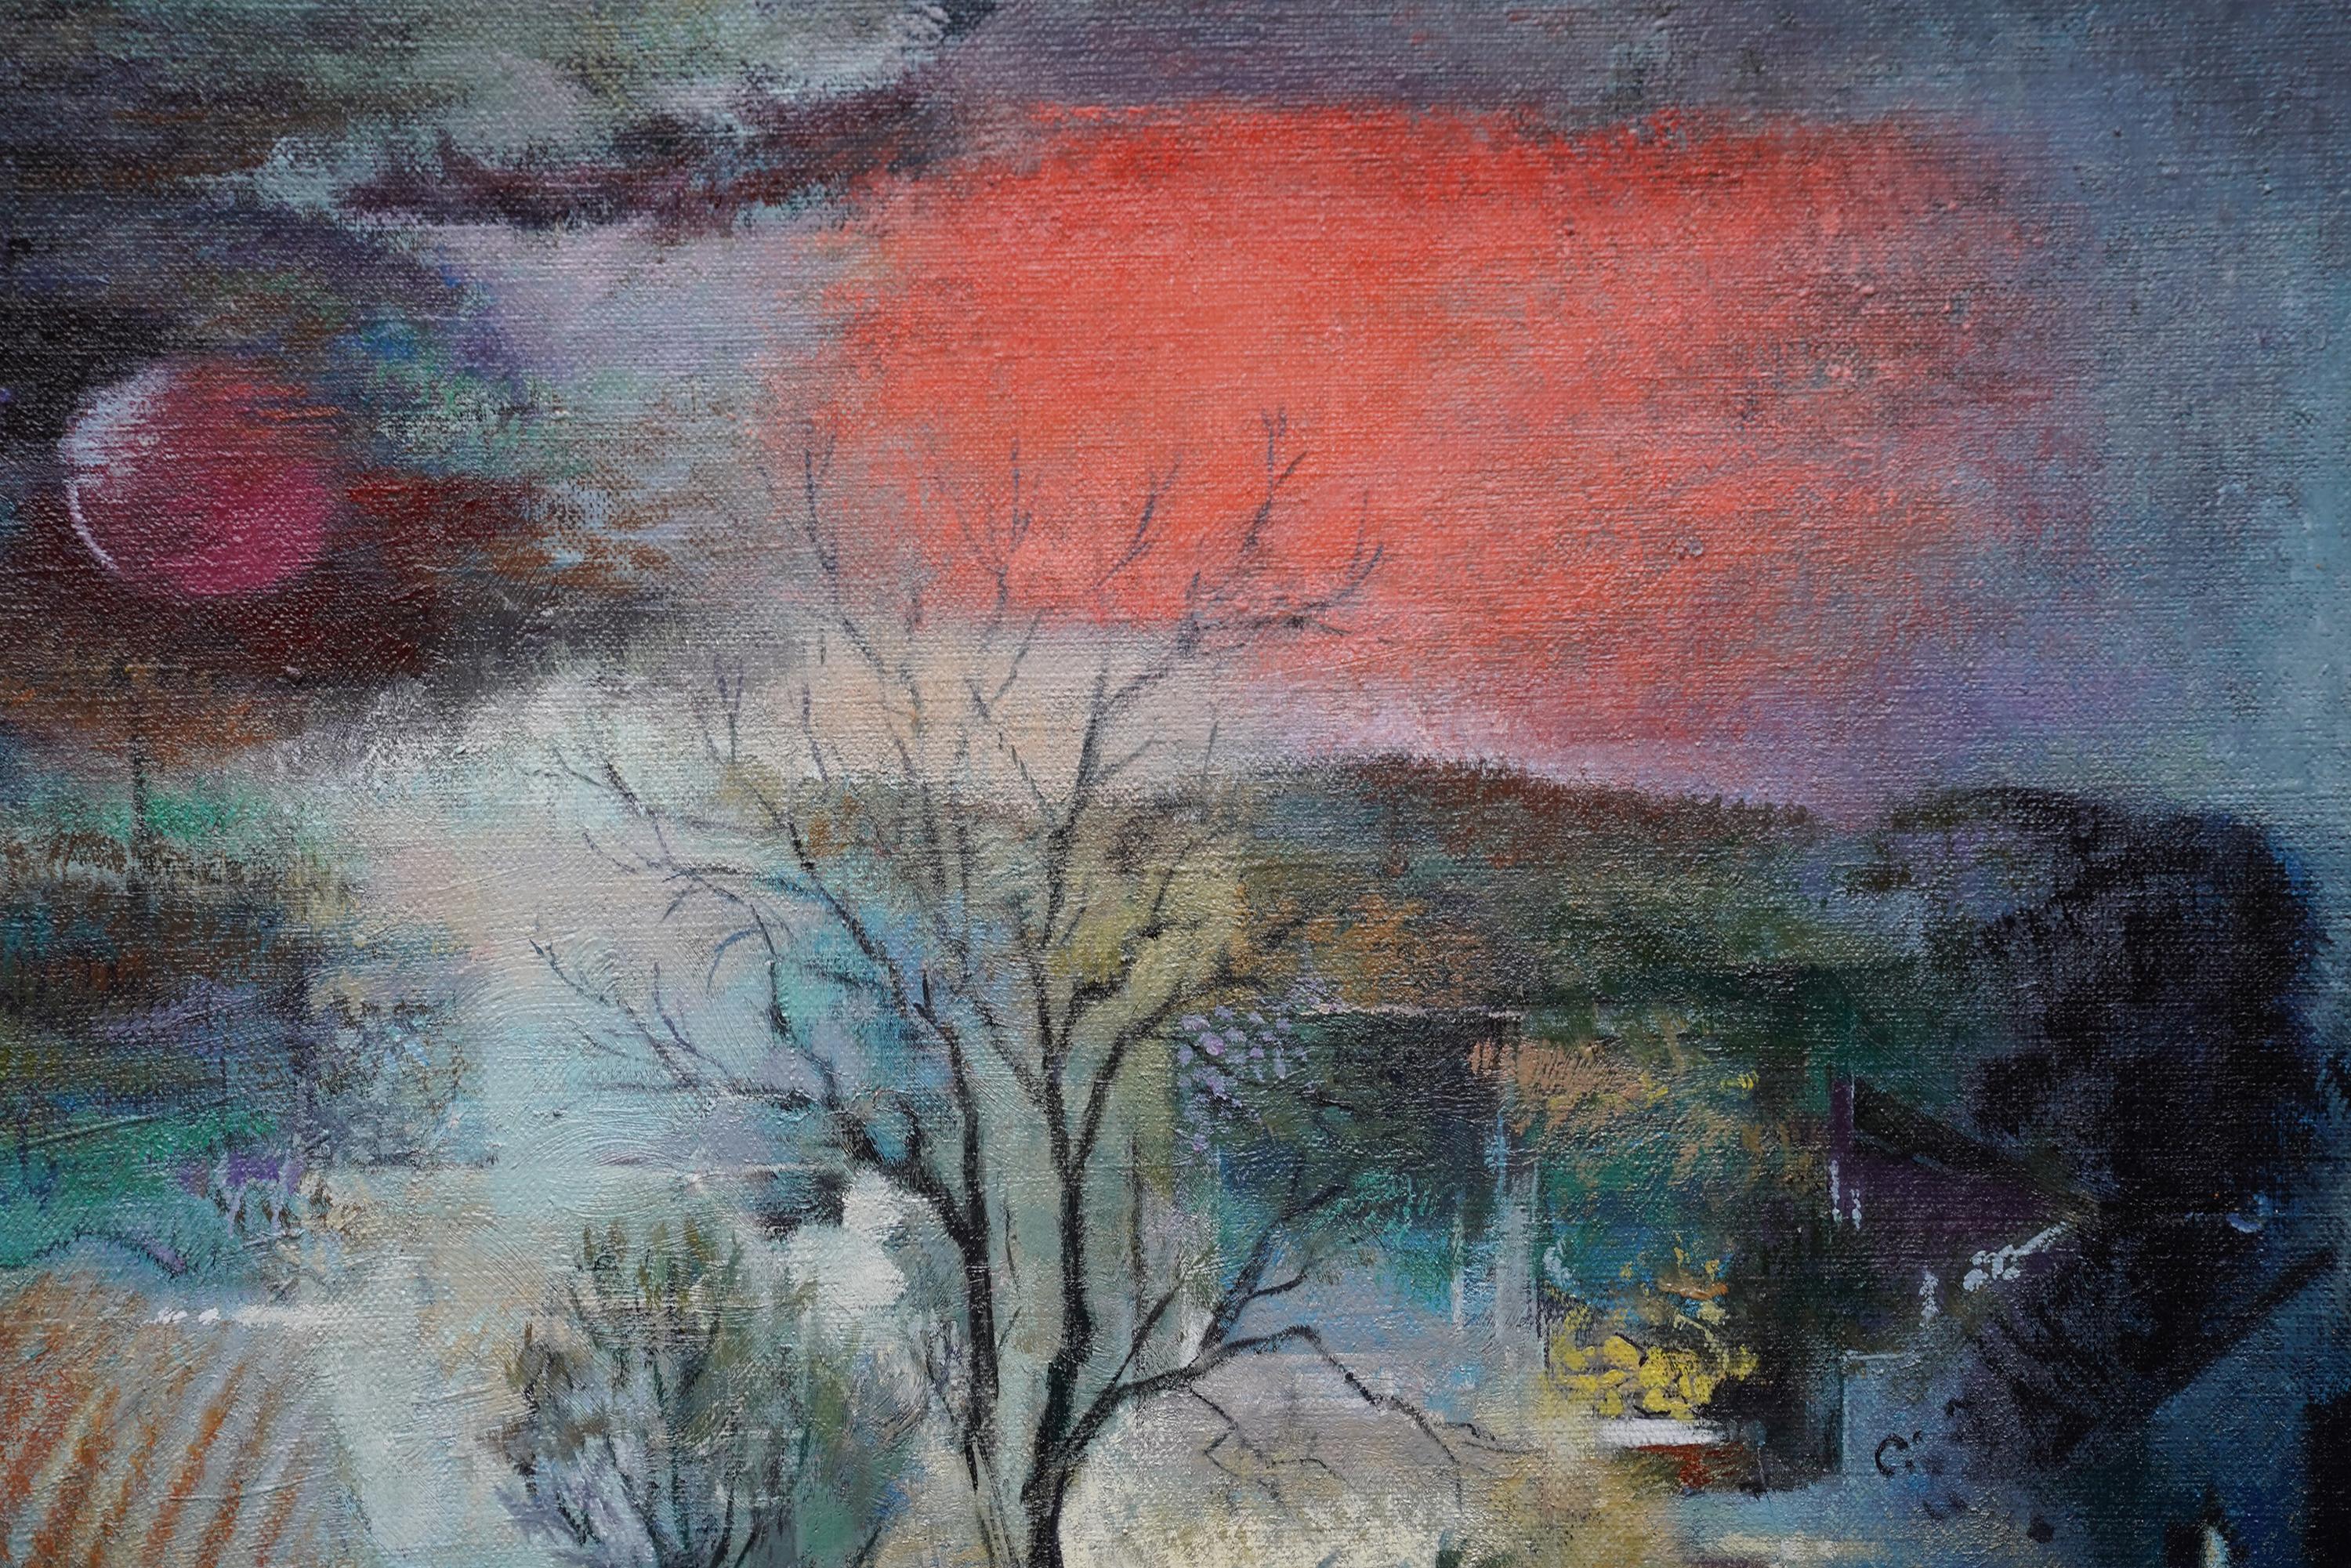 Chiltern Winter Landscape - British Surrealist 1940s art landscape oil painting  1